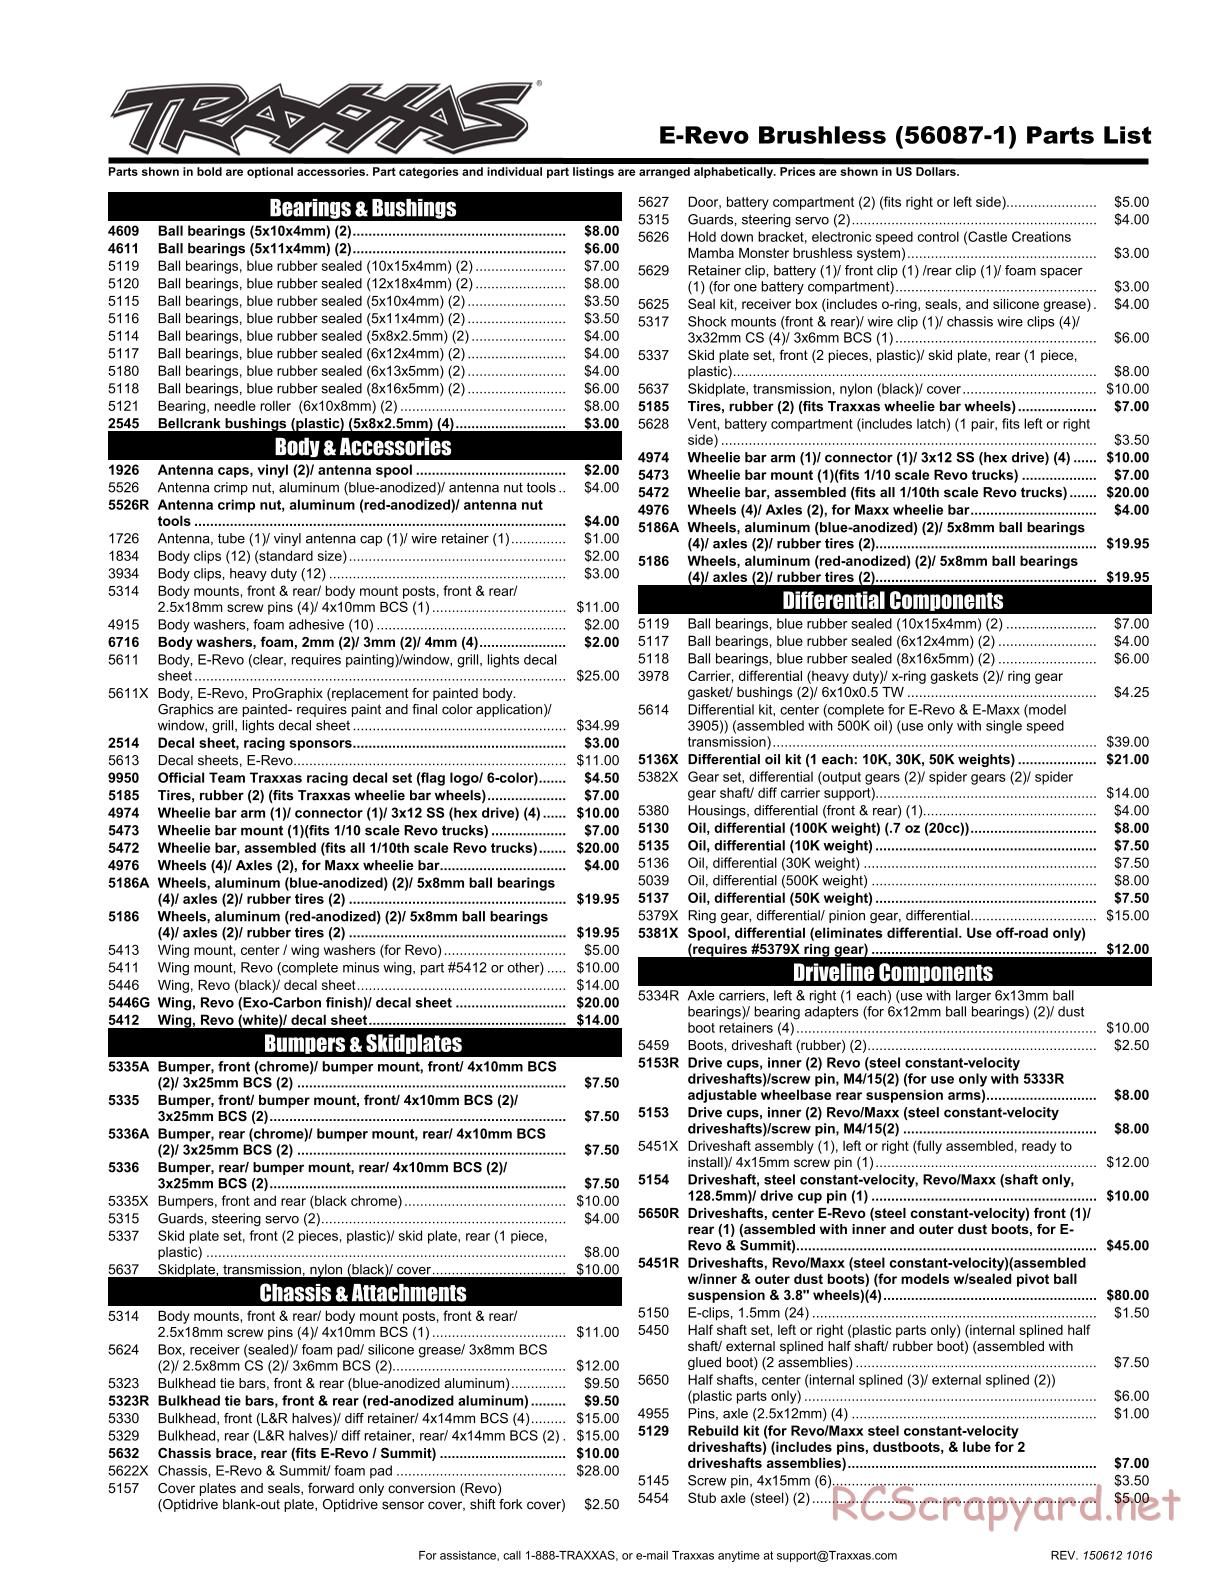 Traxxas - E-Revo Brushless TSM - Parts List - Page 1